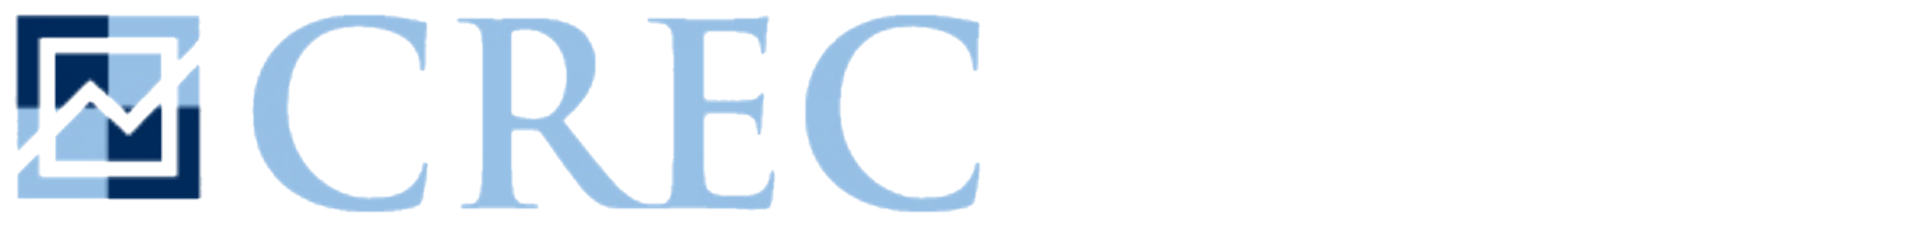 Center for Regional Economic Competitiveness logo